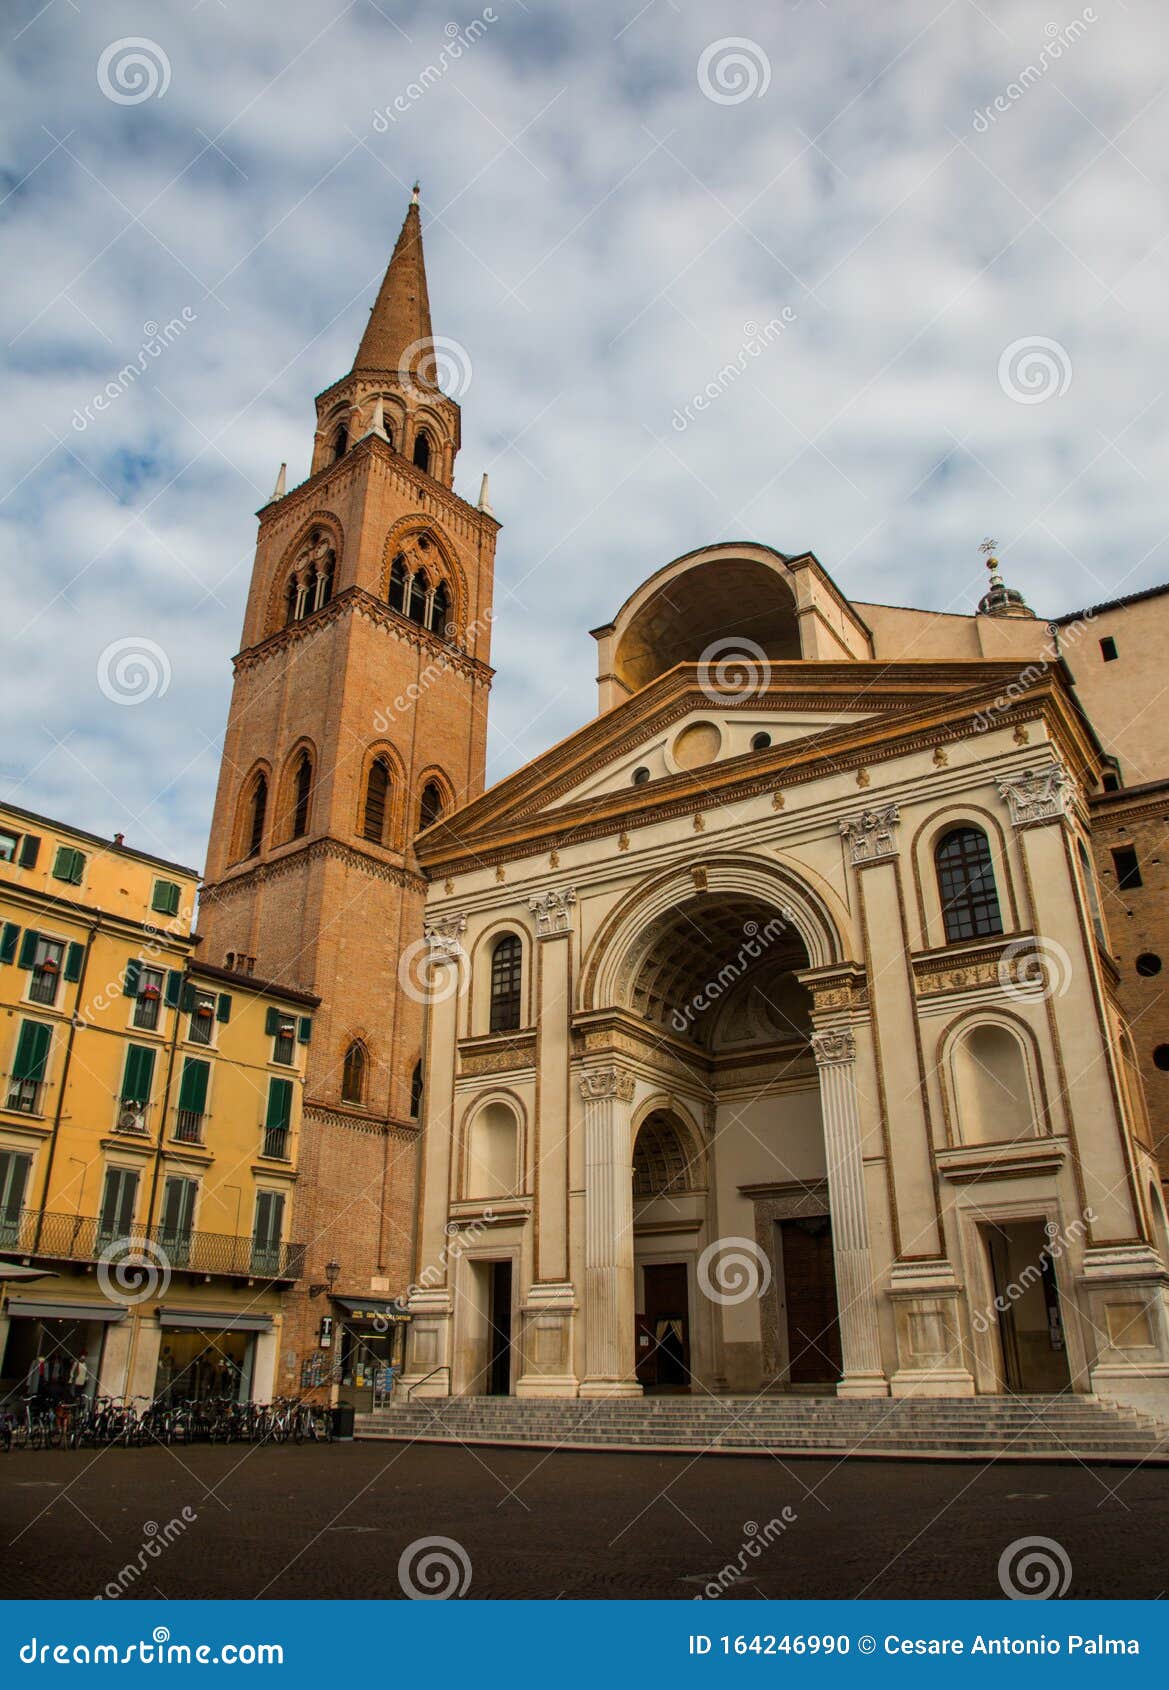 Basilica of Sant Andrea in Mantua, Italy Editorial Image - Image of ...